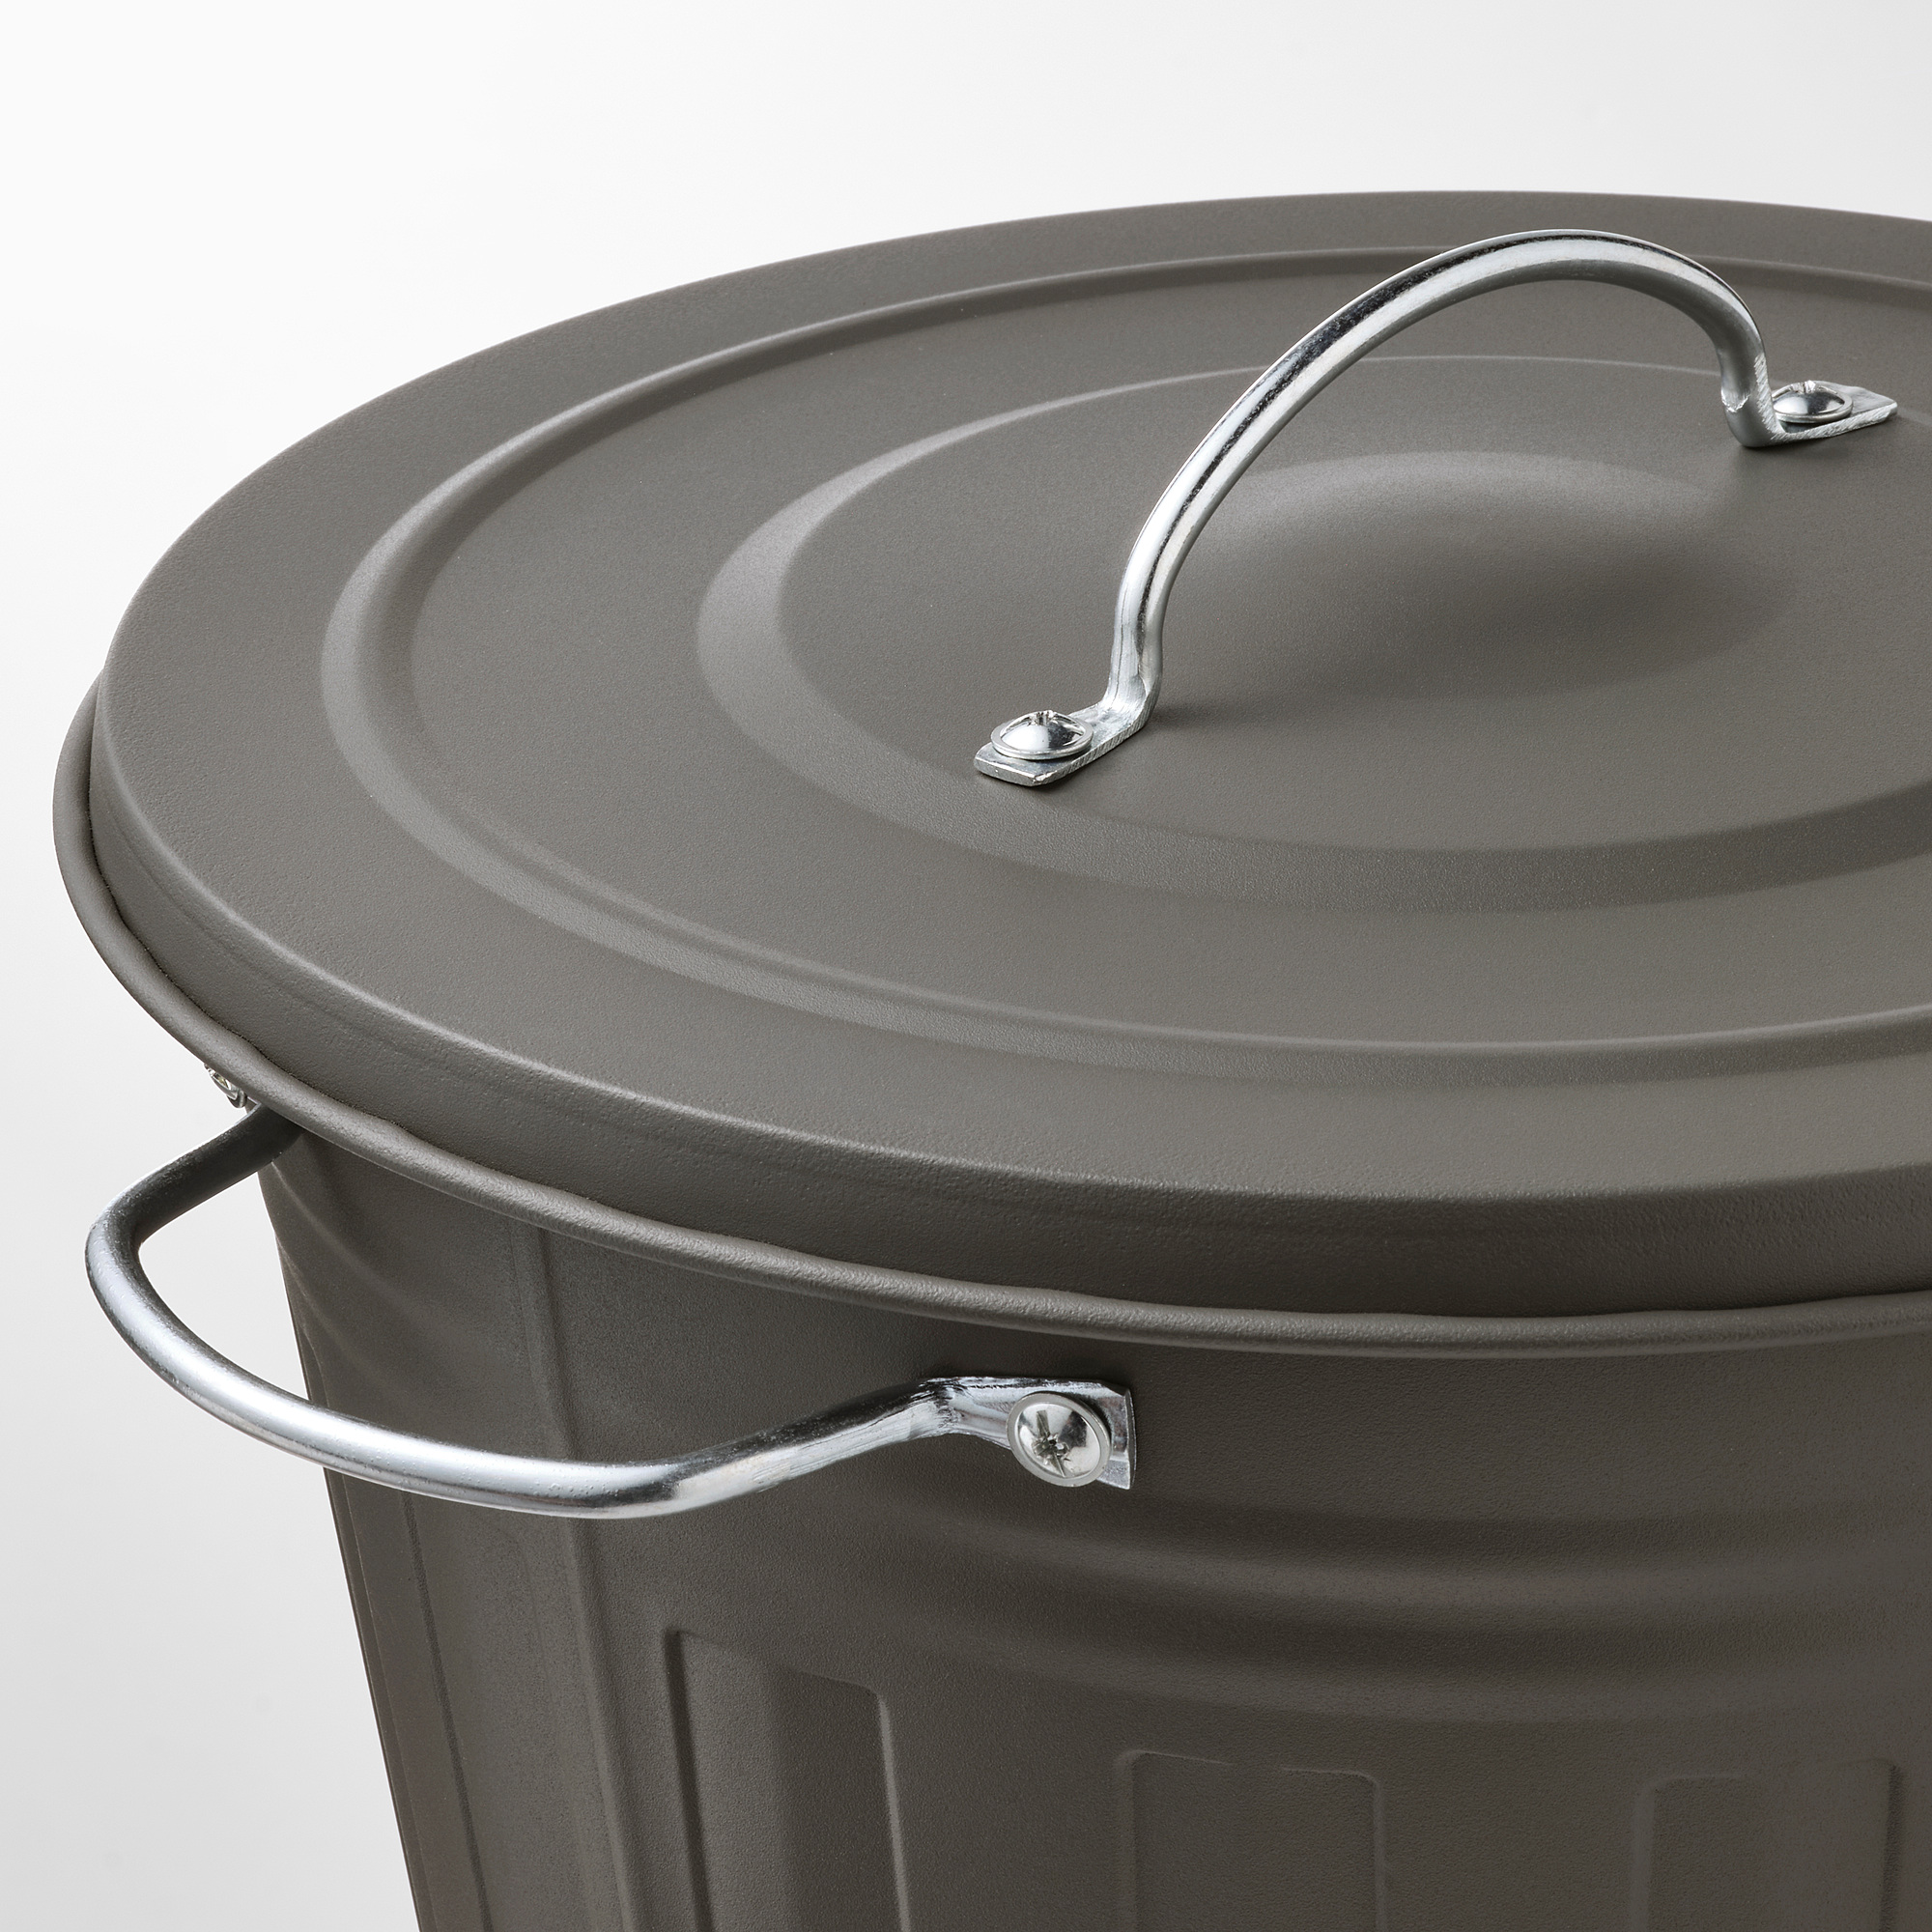 KNODD bin with lid